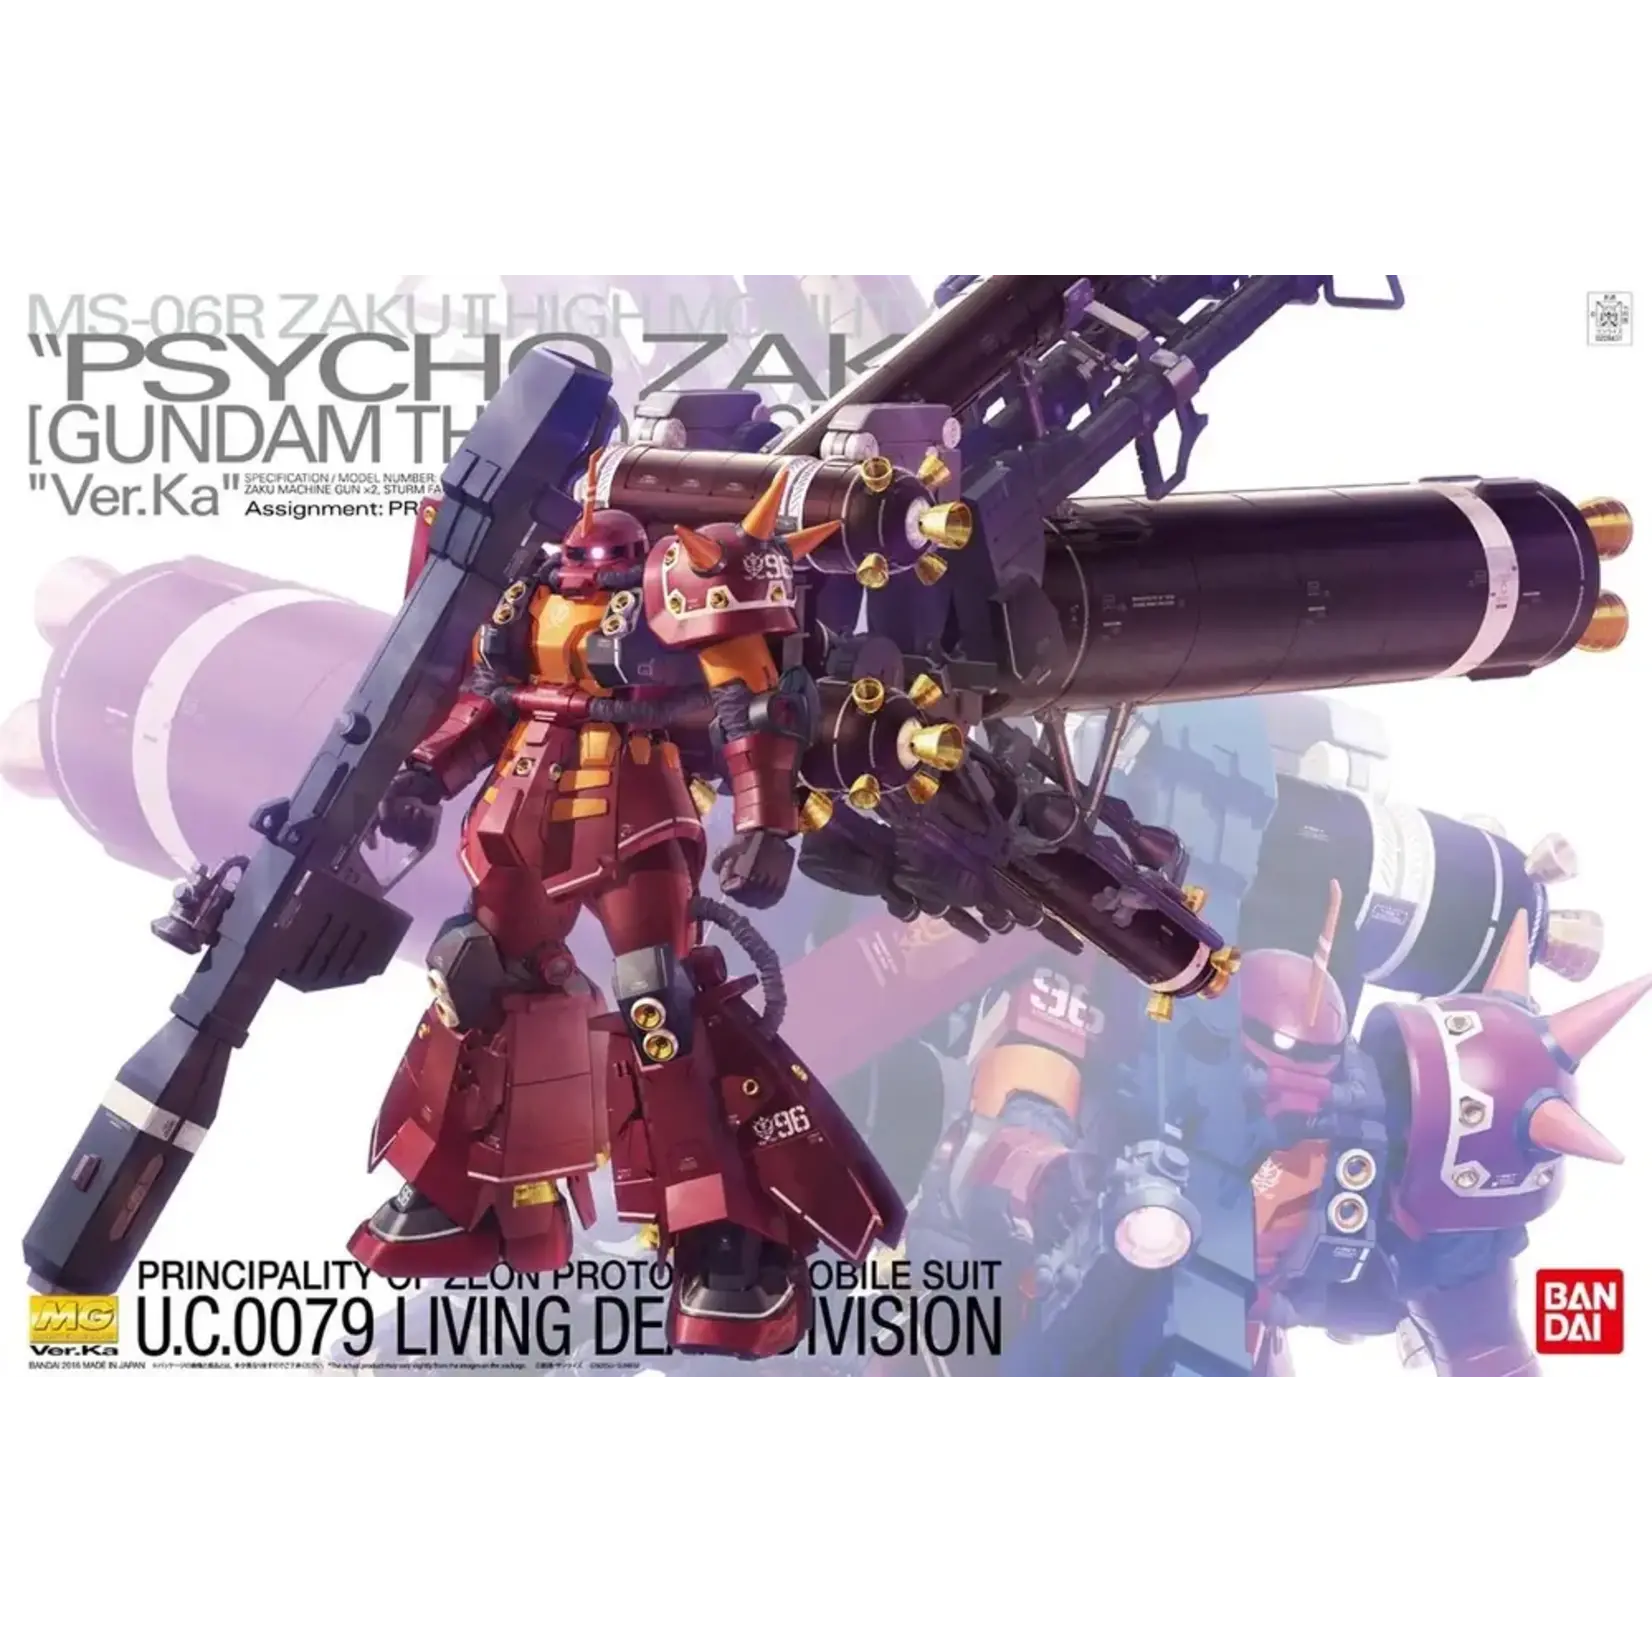 Bandai Bandai 2339750 MG Psycho Zaku (Ver. Ka) "Gundam Thunderbolt"